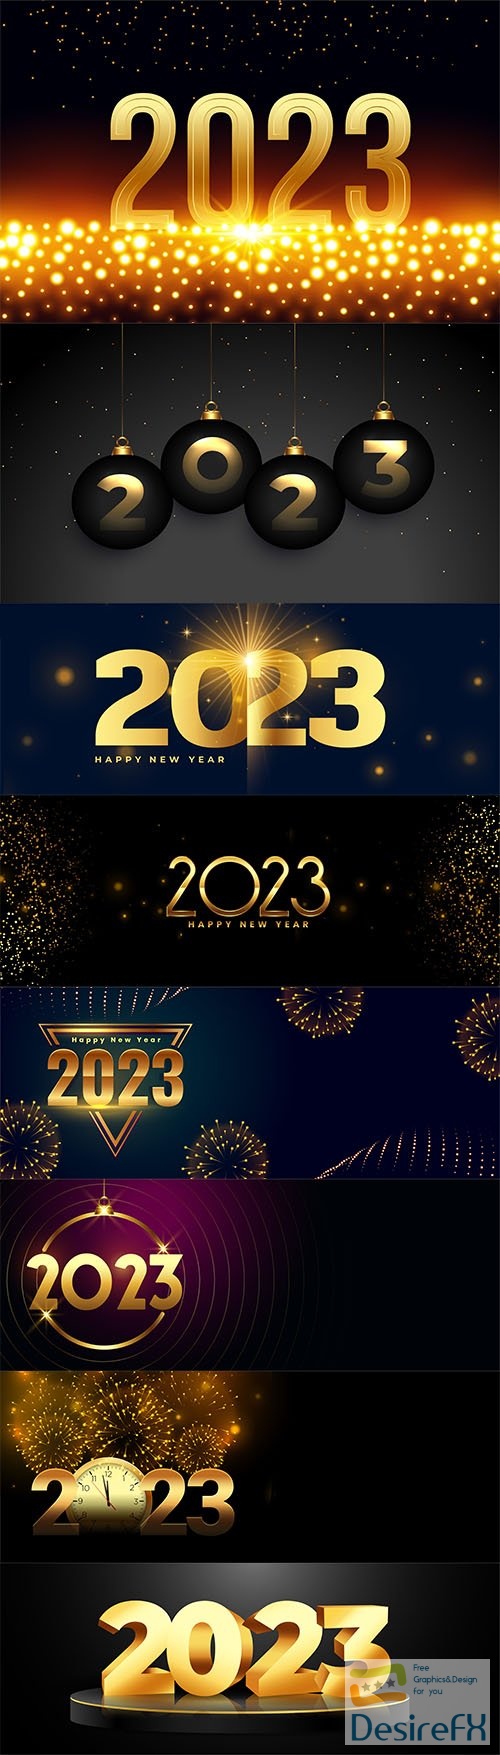 Elegant new year 2023 shiny background with light effect